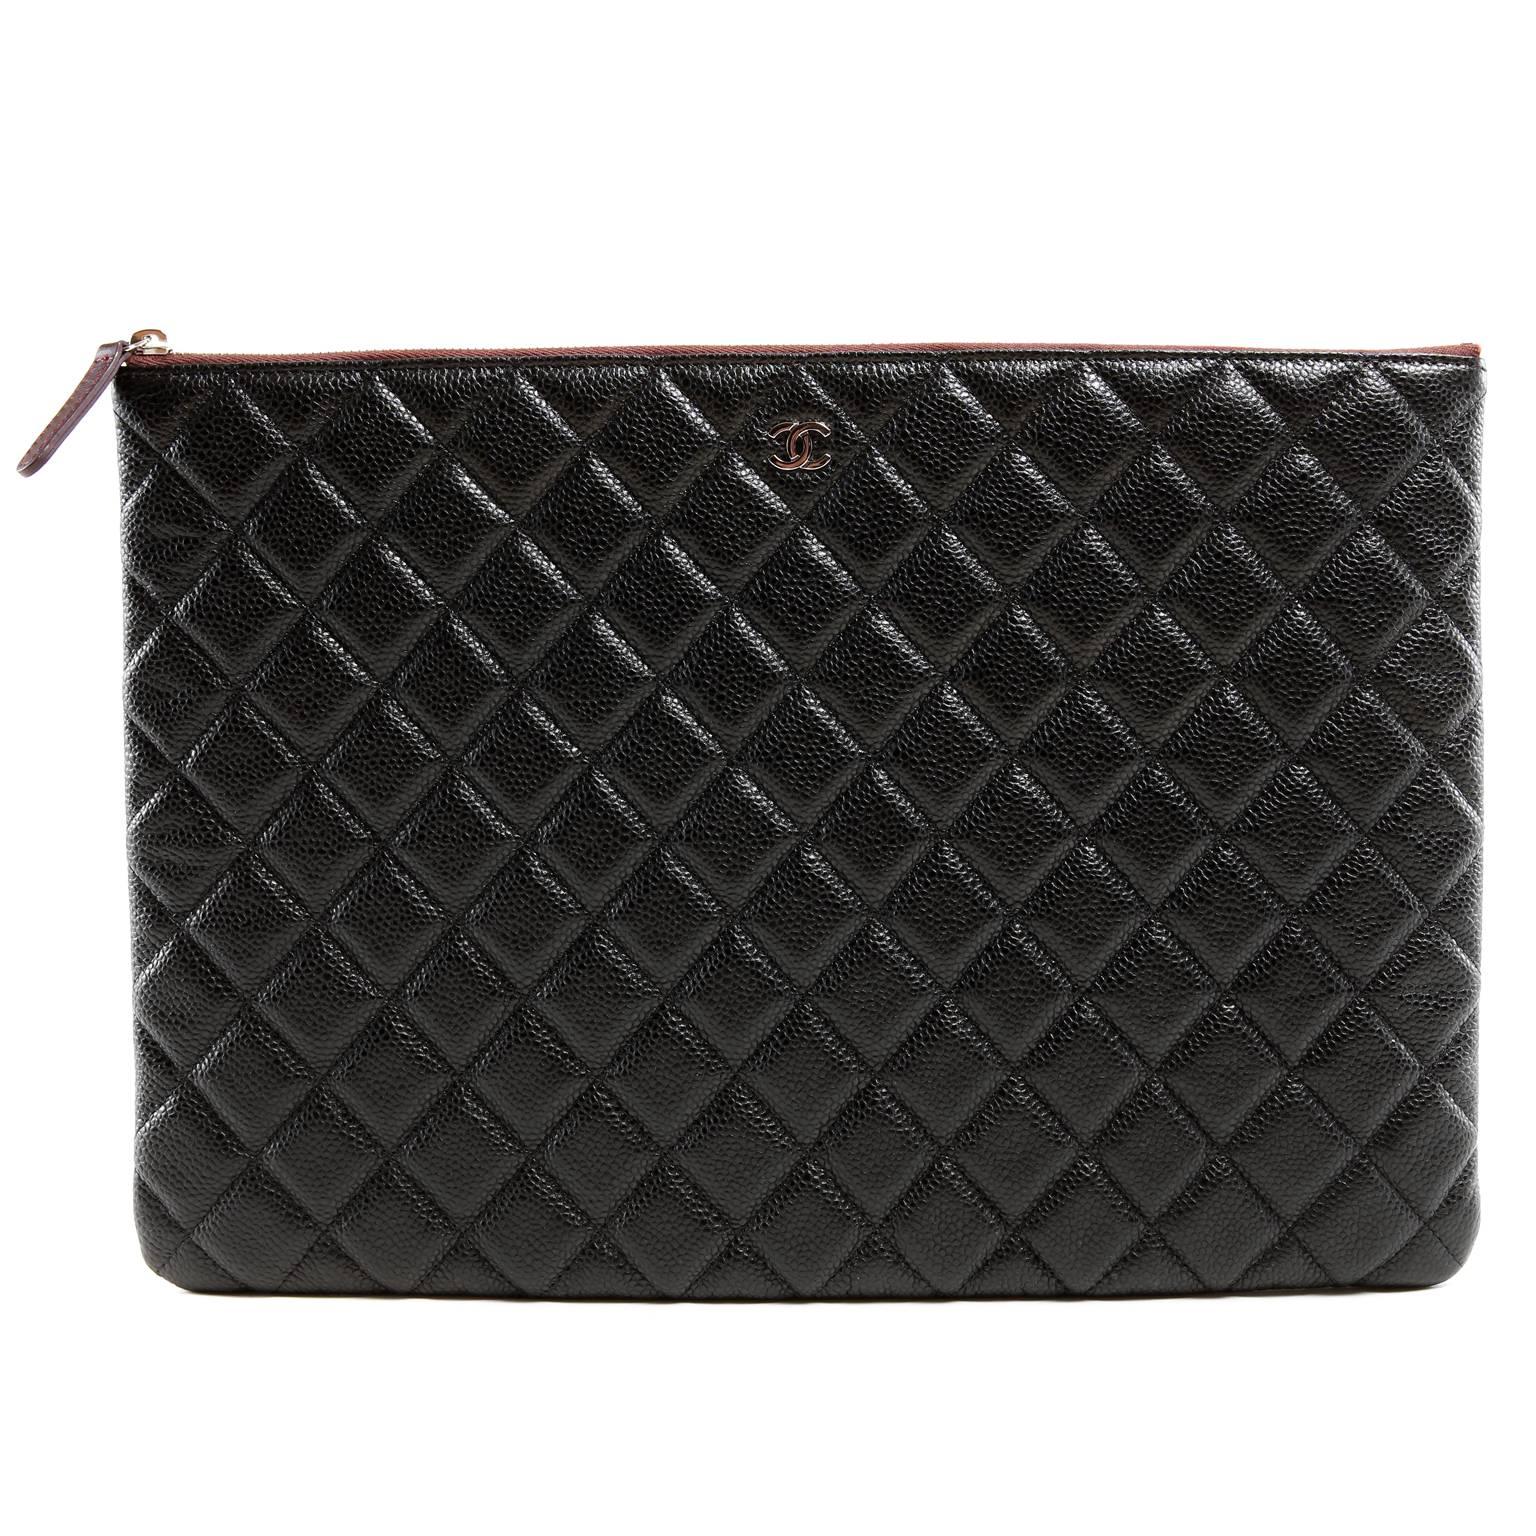 Chanel Black Caviar Leather Portfolio Case For Sale